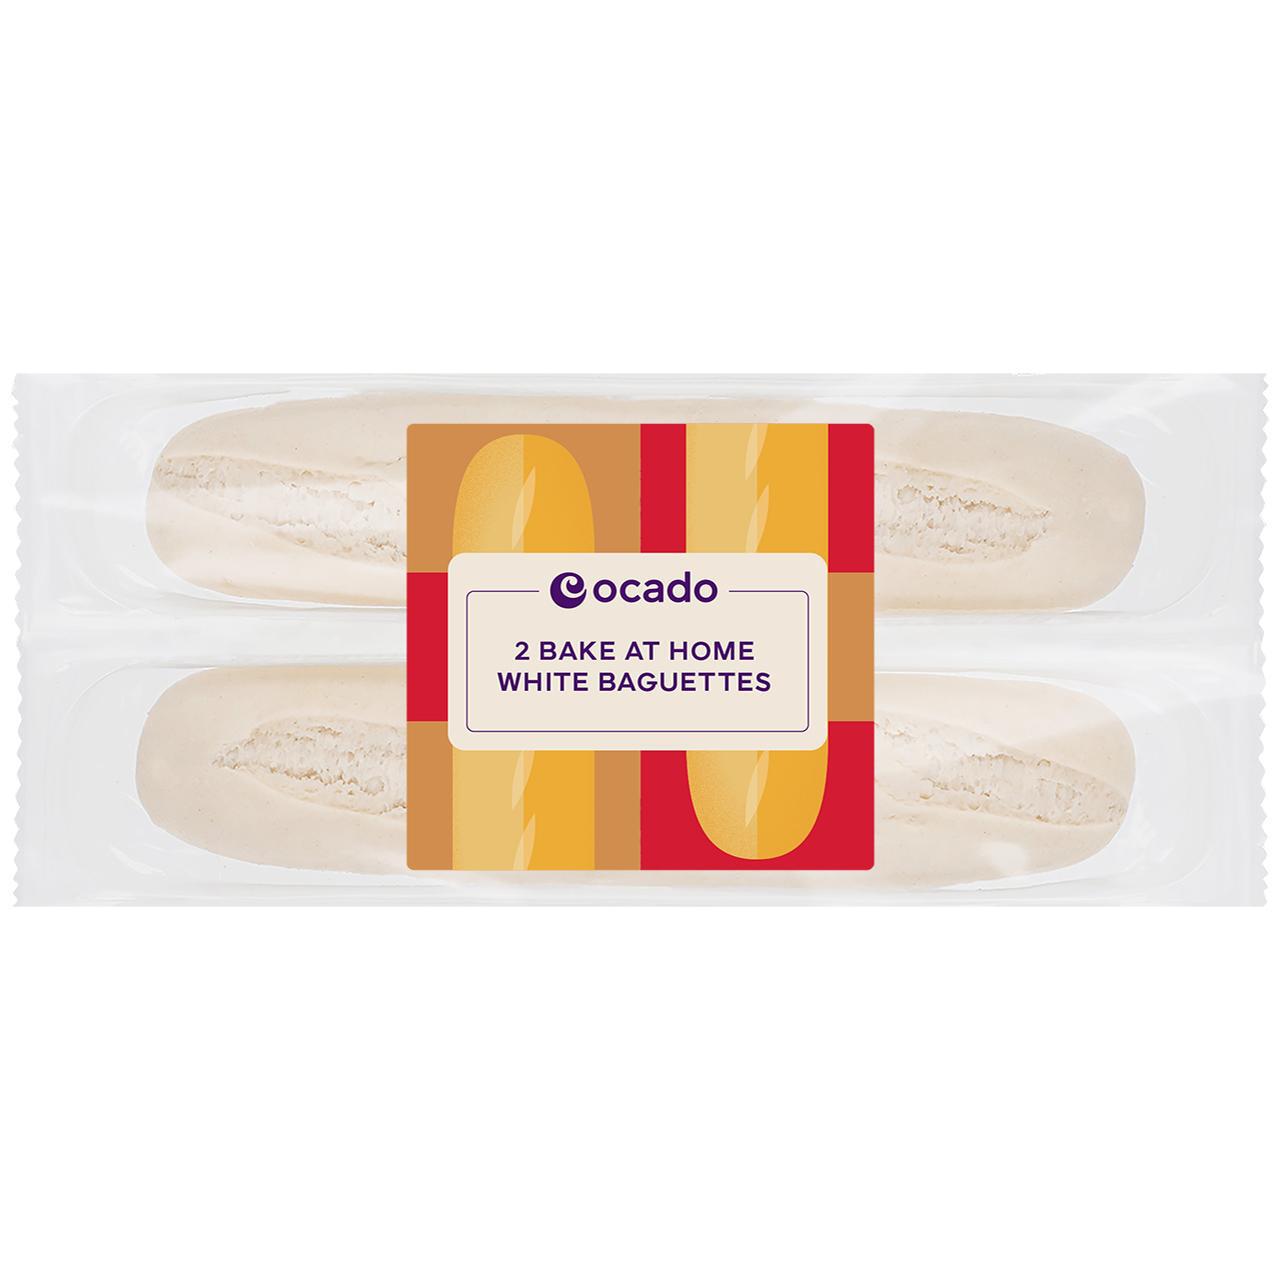 Ocado Bake at Home White Baguettes 2 per pack